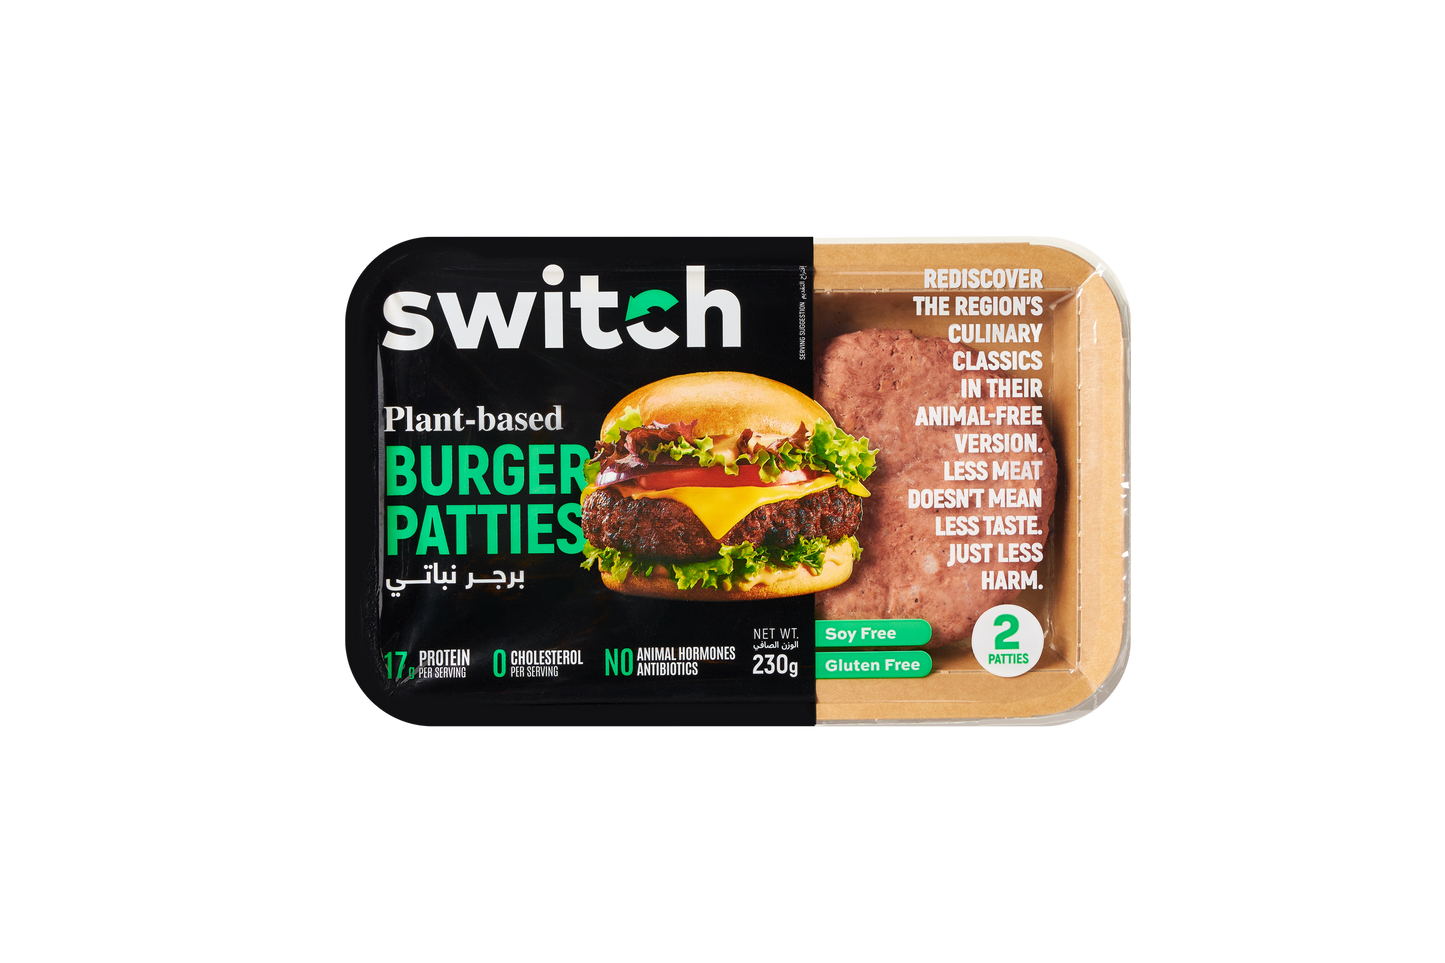 Switch 100% Plant-based Burger Patties, 230g, GMO-free, Cholesterol-free, Soy-free, Gluten-free, Dairy-free, Halal (2 Patties)(Frozen)